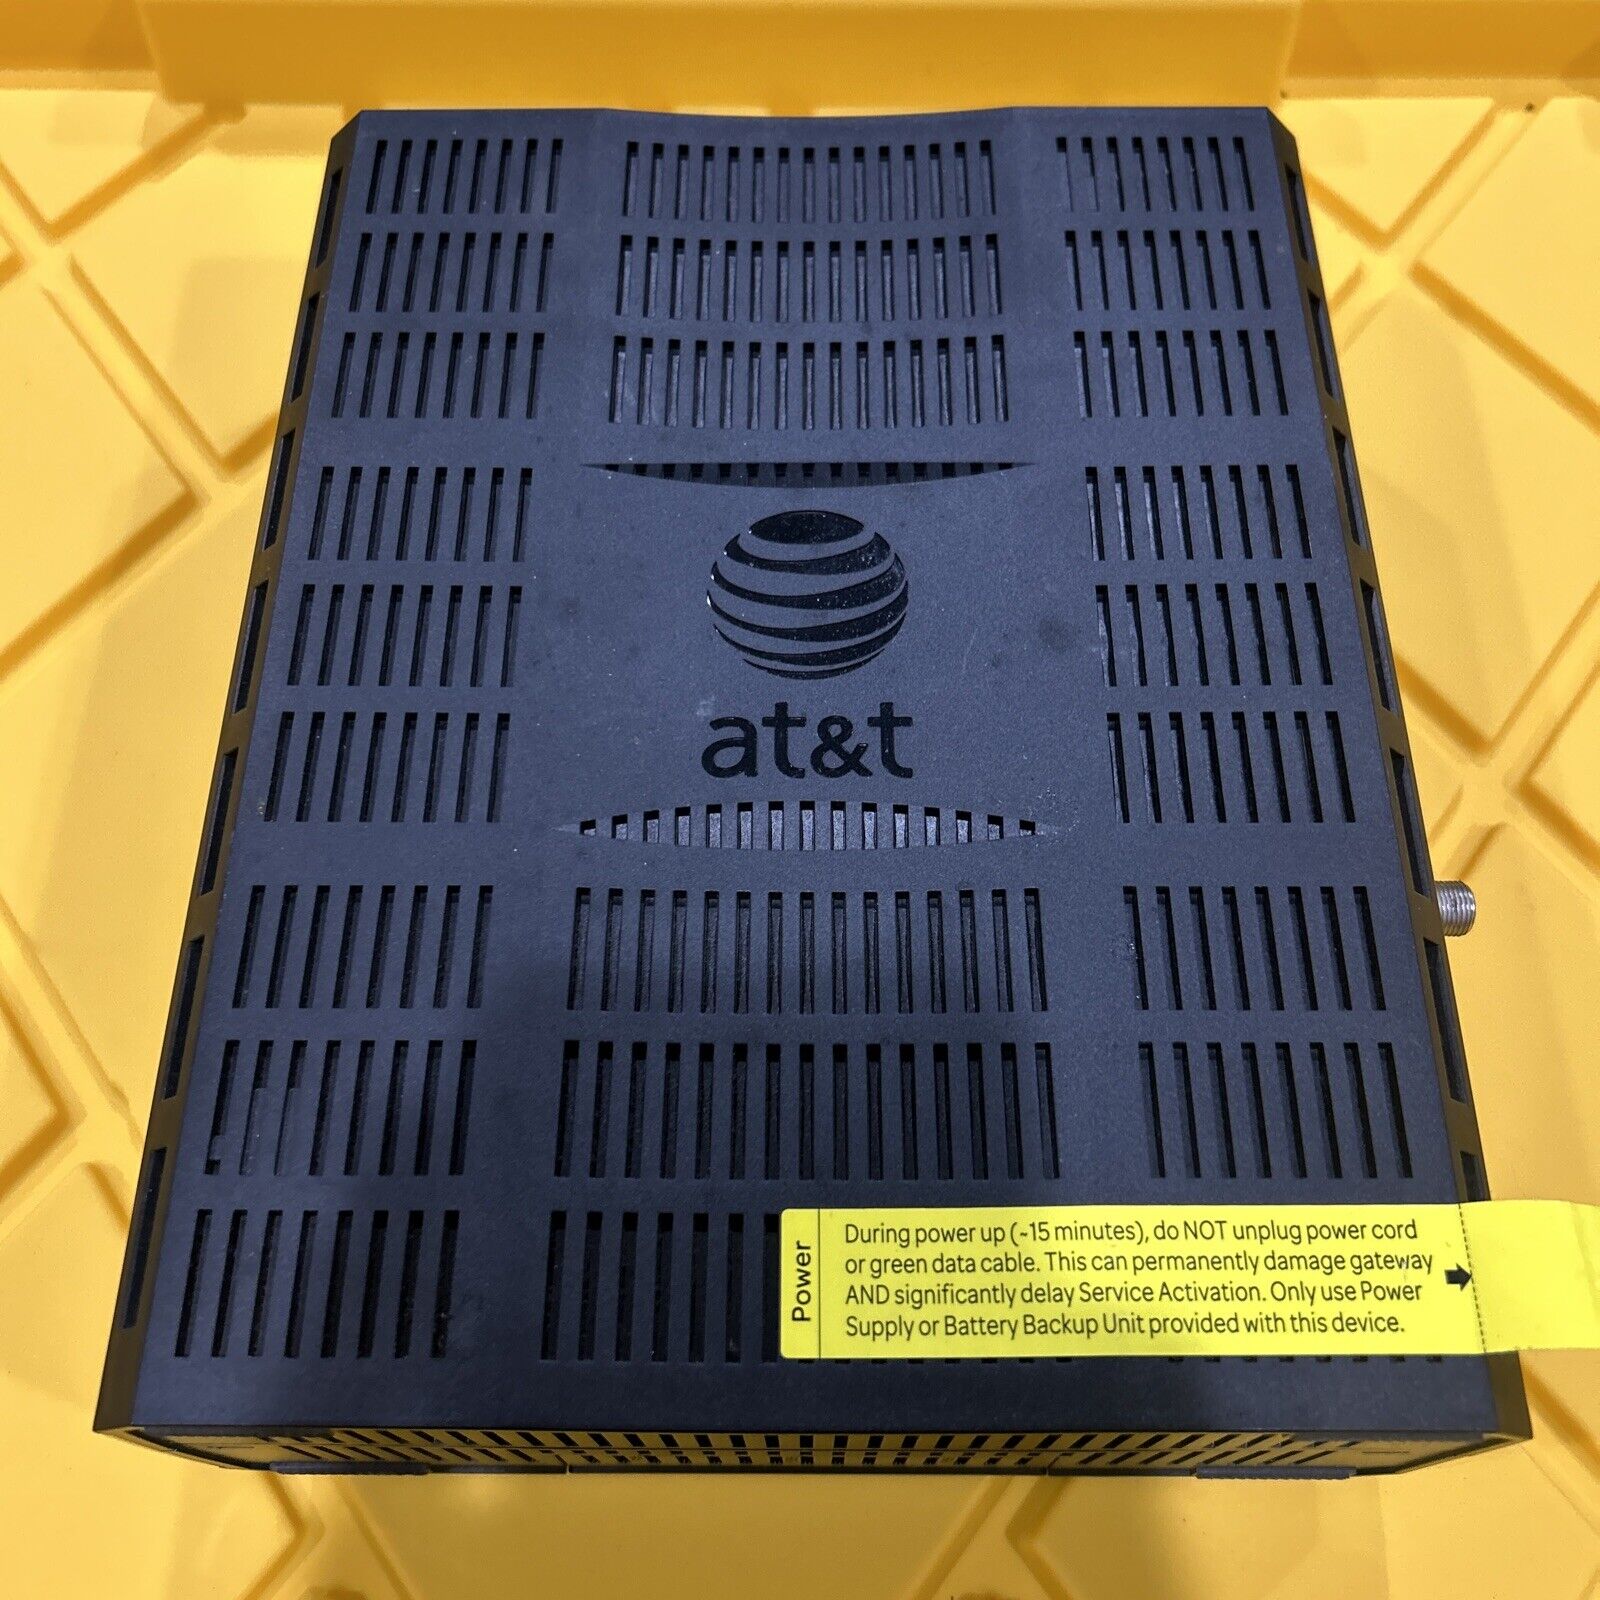 Arris NVG599 AT&T U-verse Gateway Wireless Modem Router No Power Cord